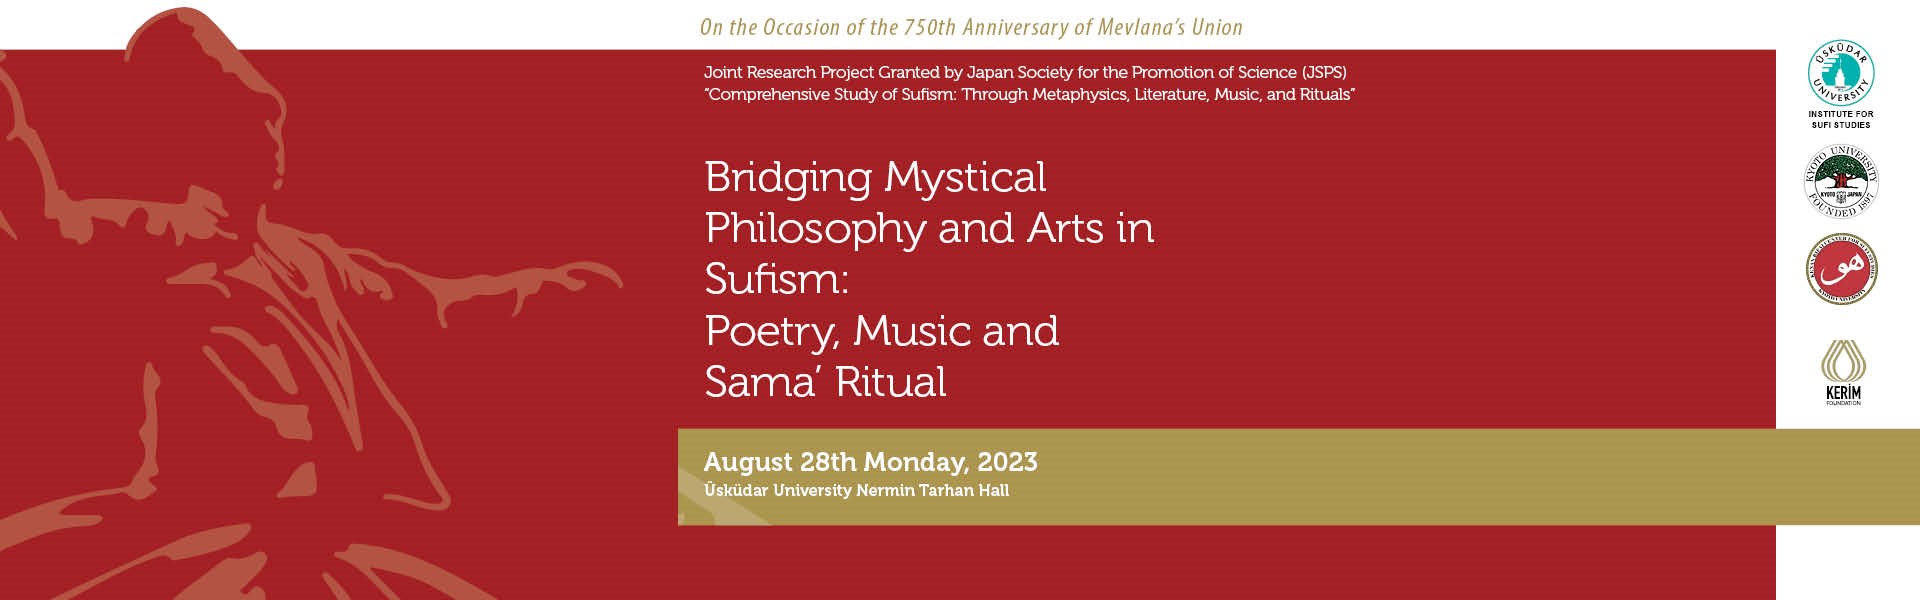 BRIDGING MYSTICAL PHILOSOPHY AND ARTS IN SUFISM: POETRY, MUSIC AND SAMA’ RITUAL BAŞLIKLI ULUSLARARASI SEMPOZYUM